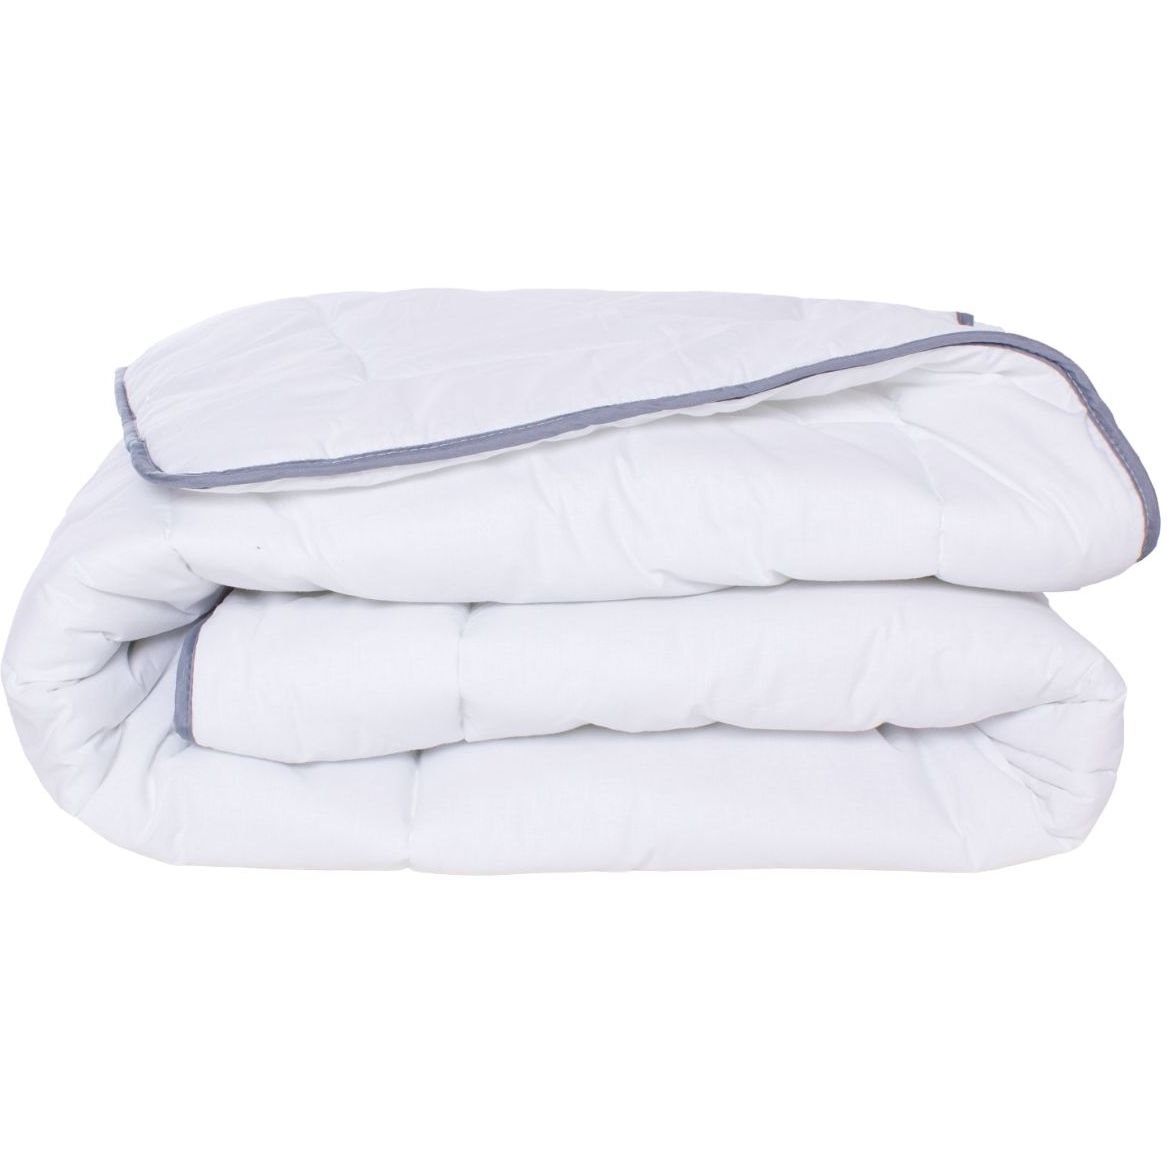 Одеяло шерстяное MirSon Royal №027, зимнее, 140x205 см, белое - фото 1